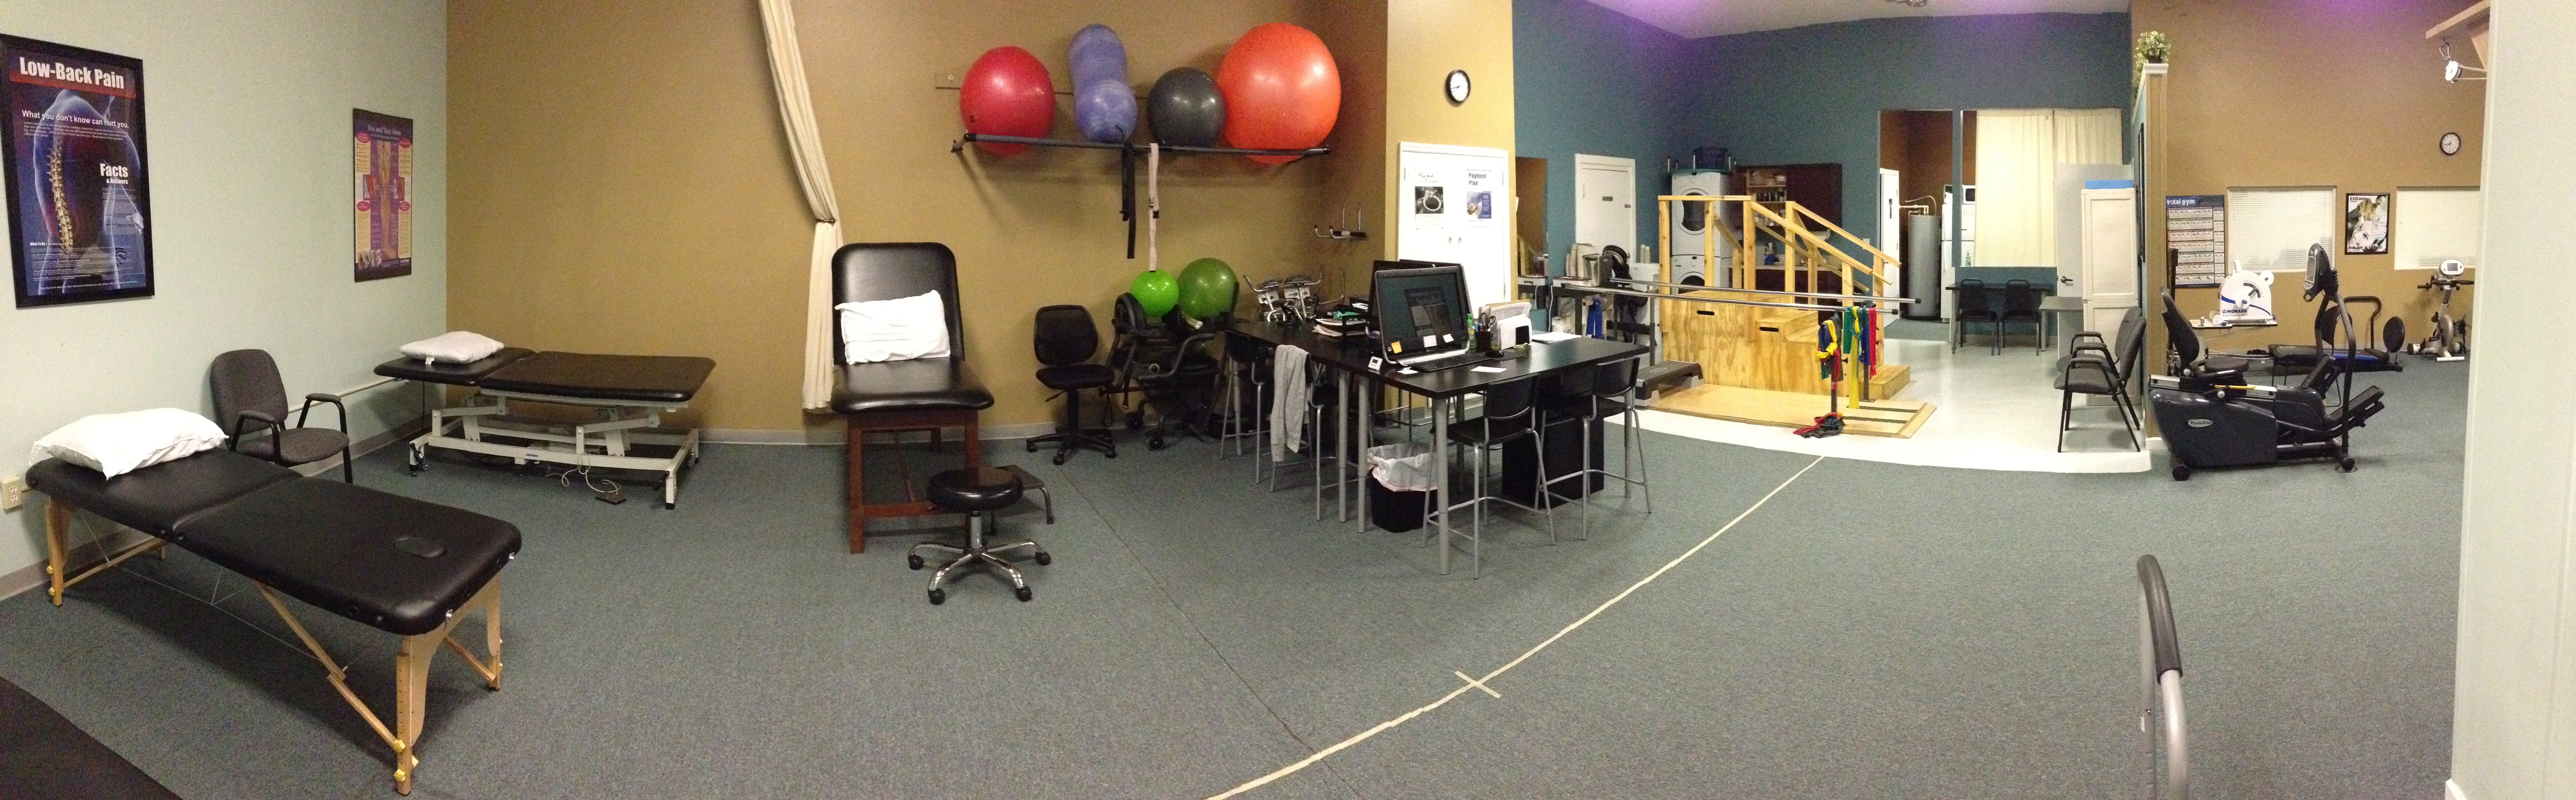 office panorama 1